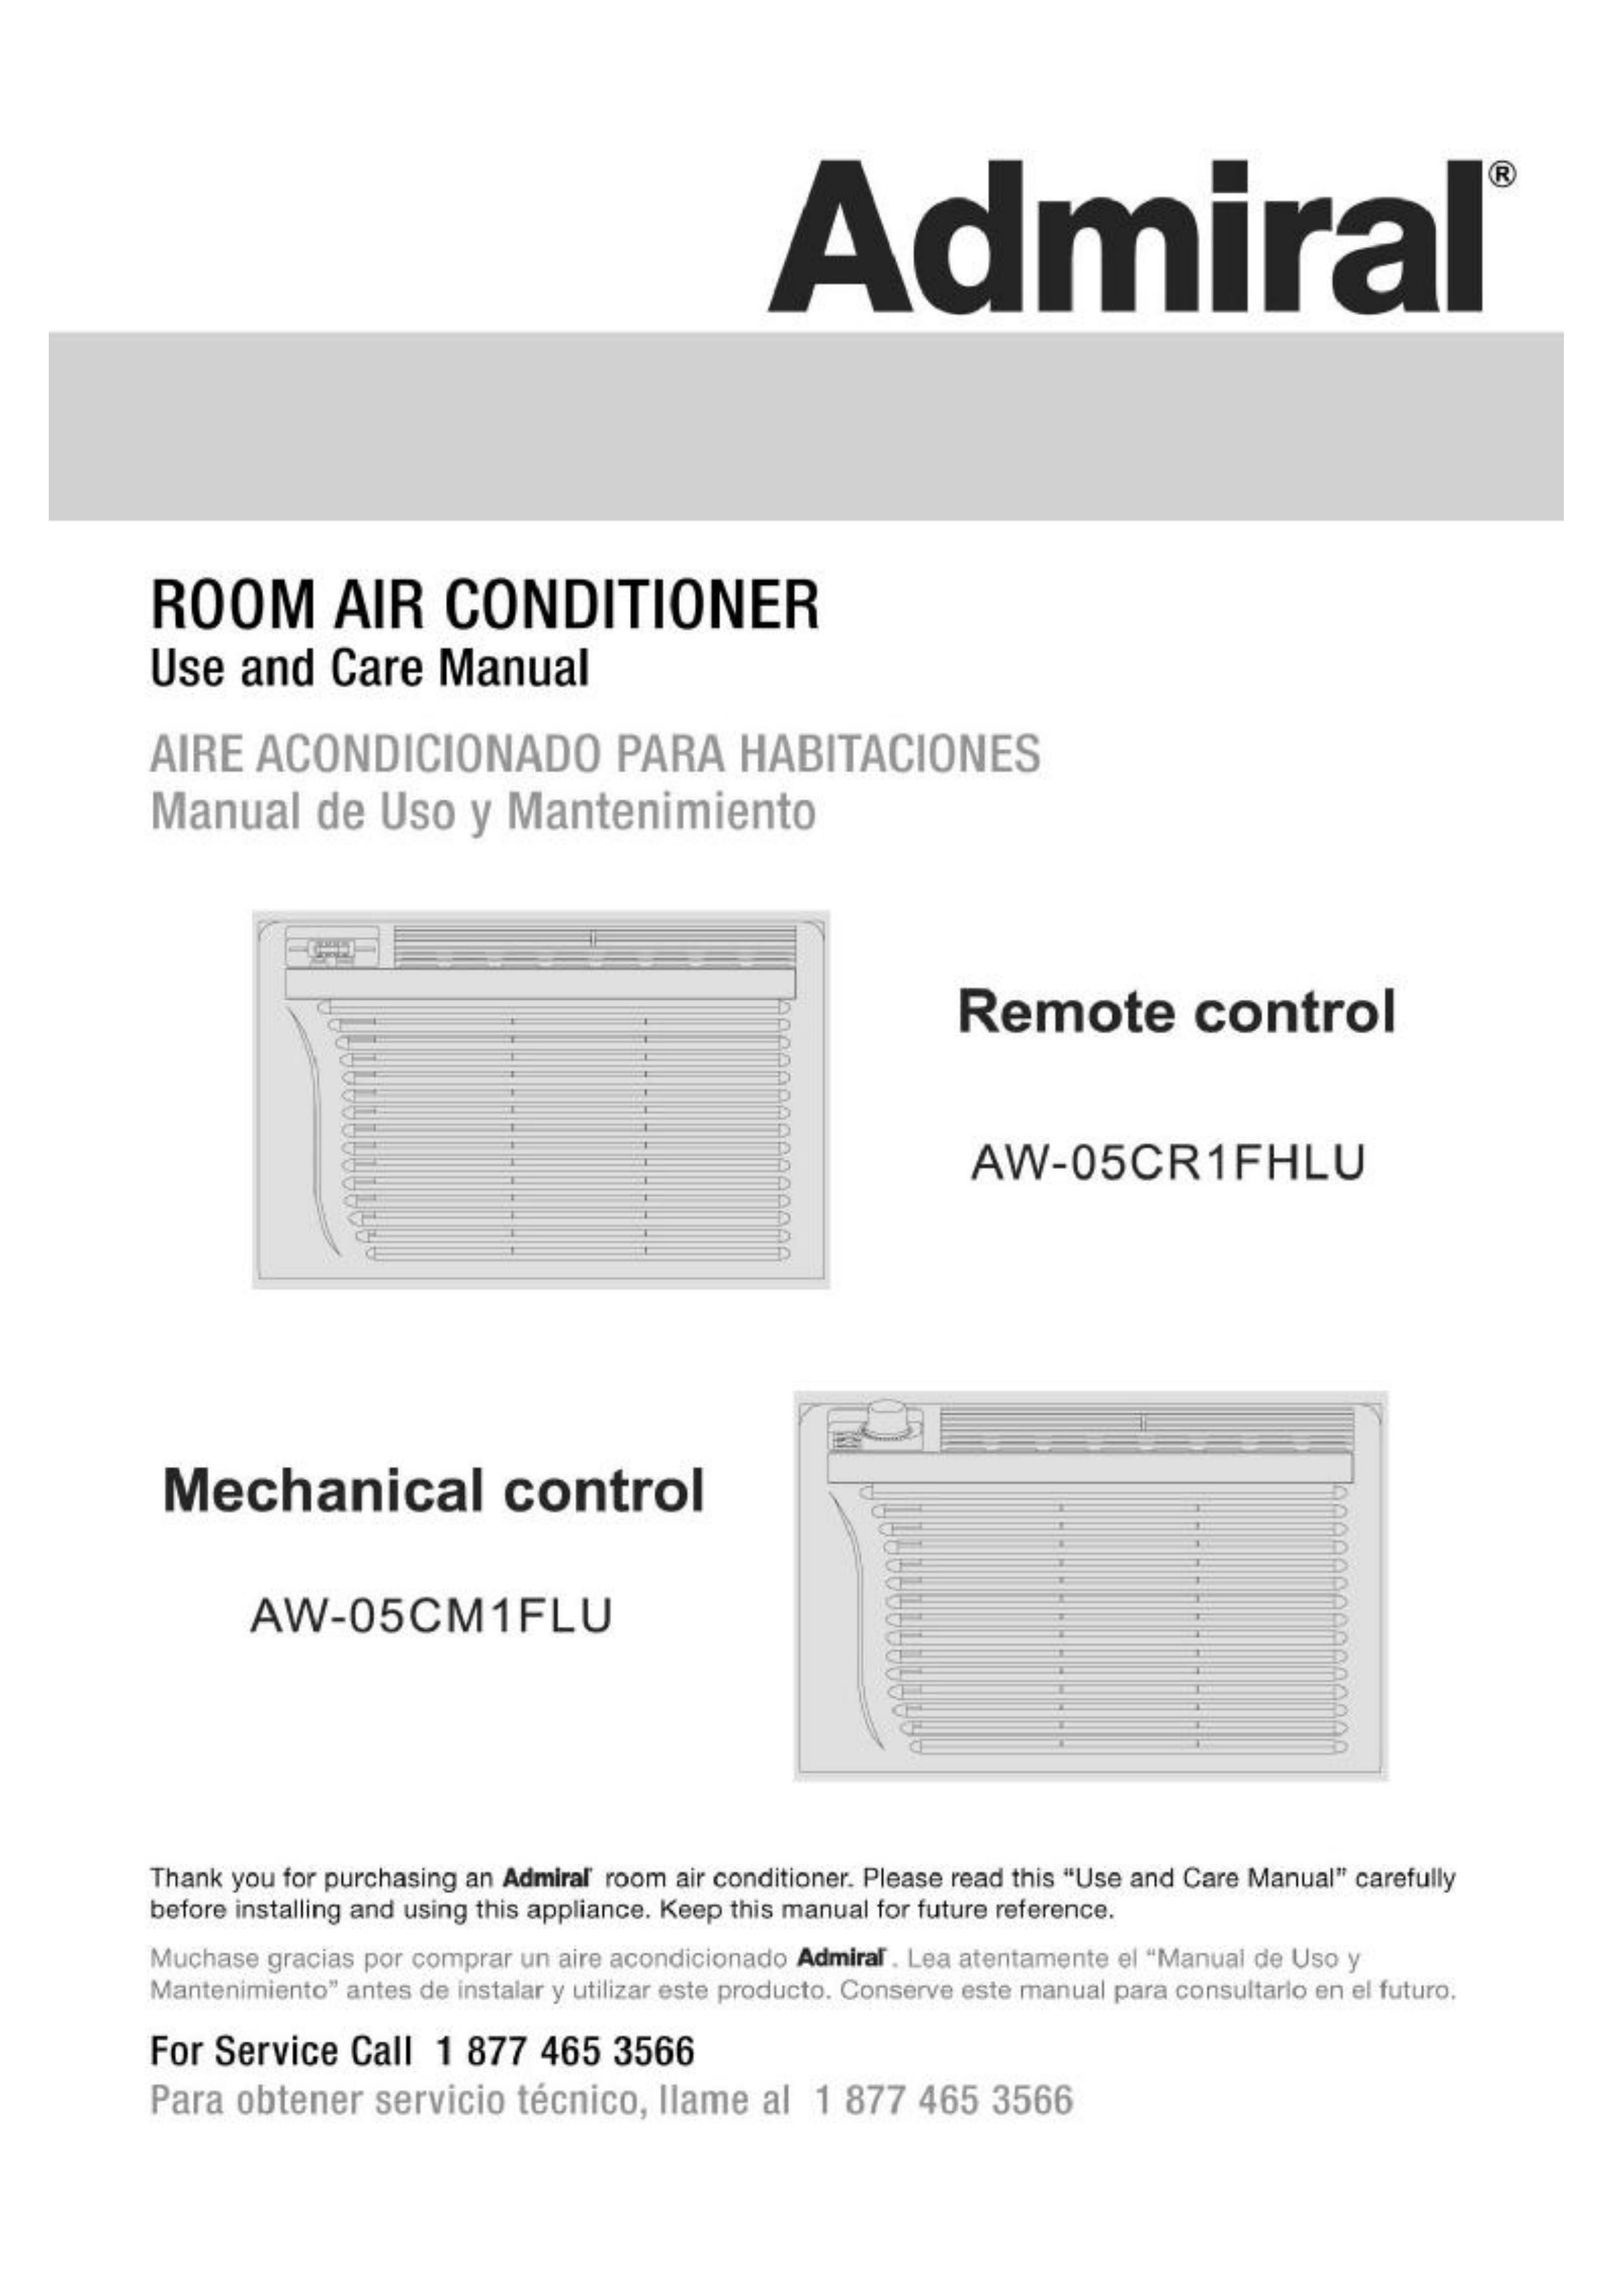 Admiral AW-05CR1FHLU Air Conditioner User Manual